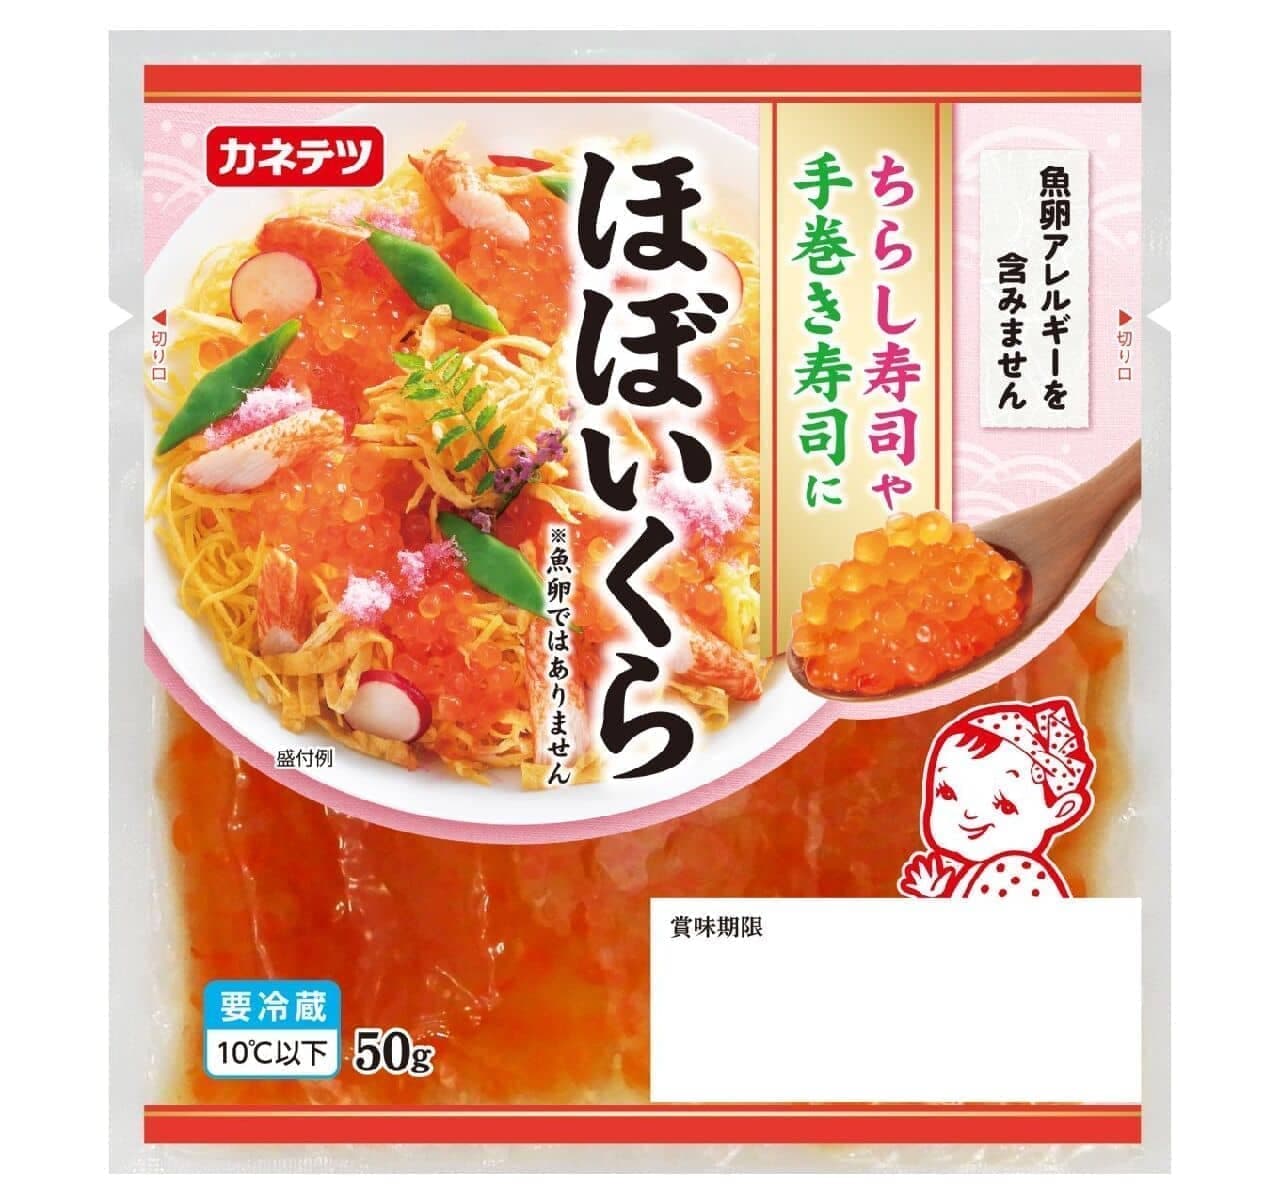 Kanetetsu Delicatessen Foods "Almost Salmon Roe